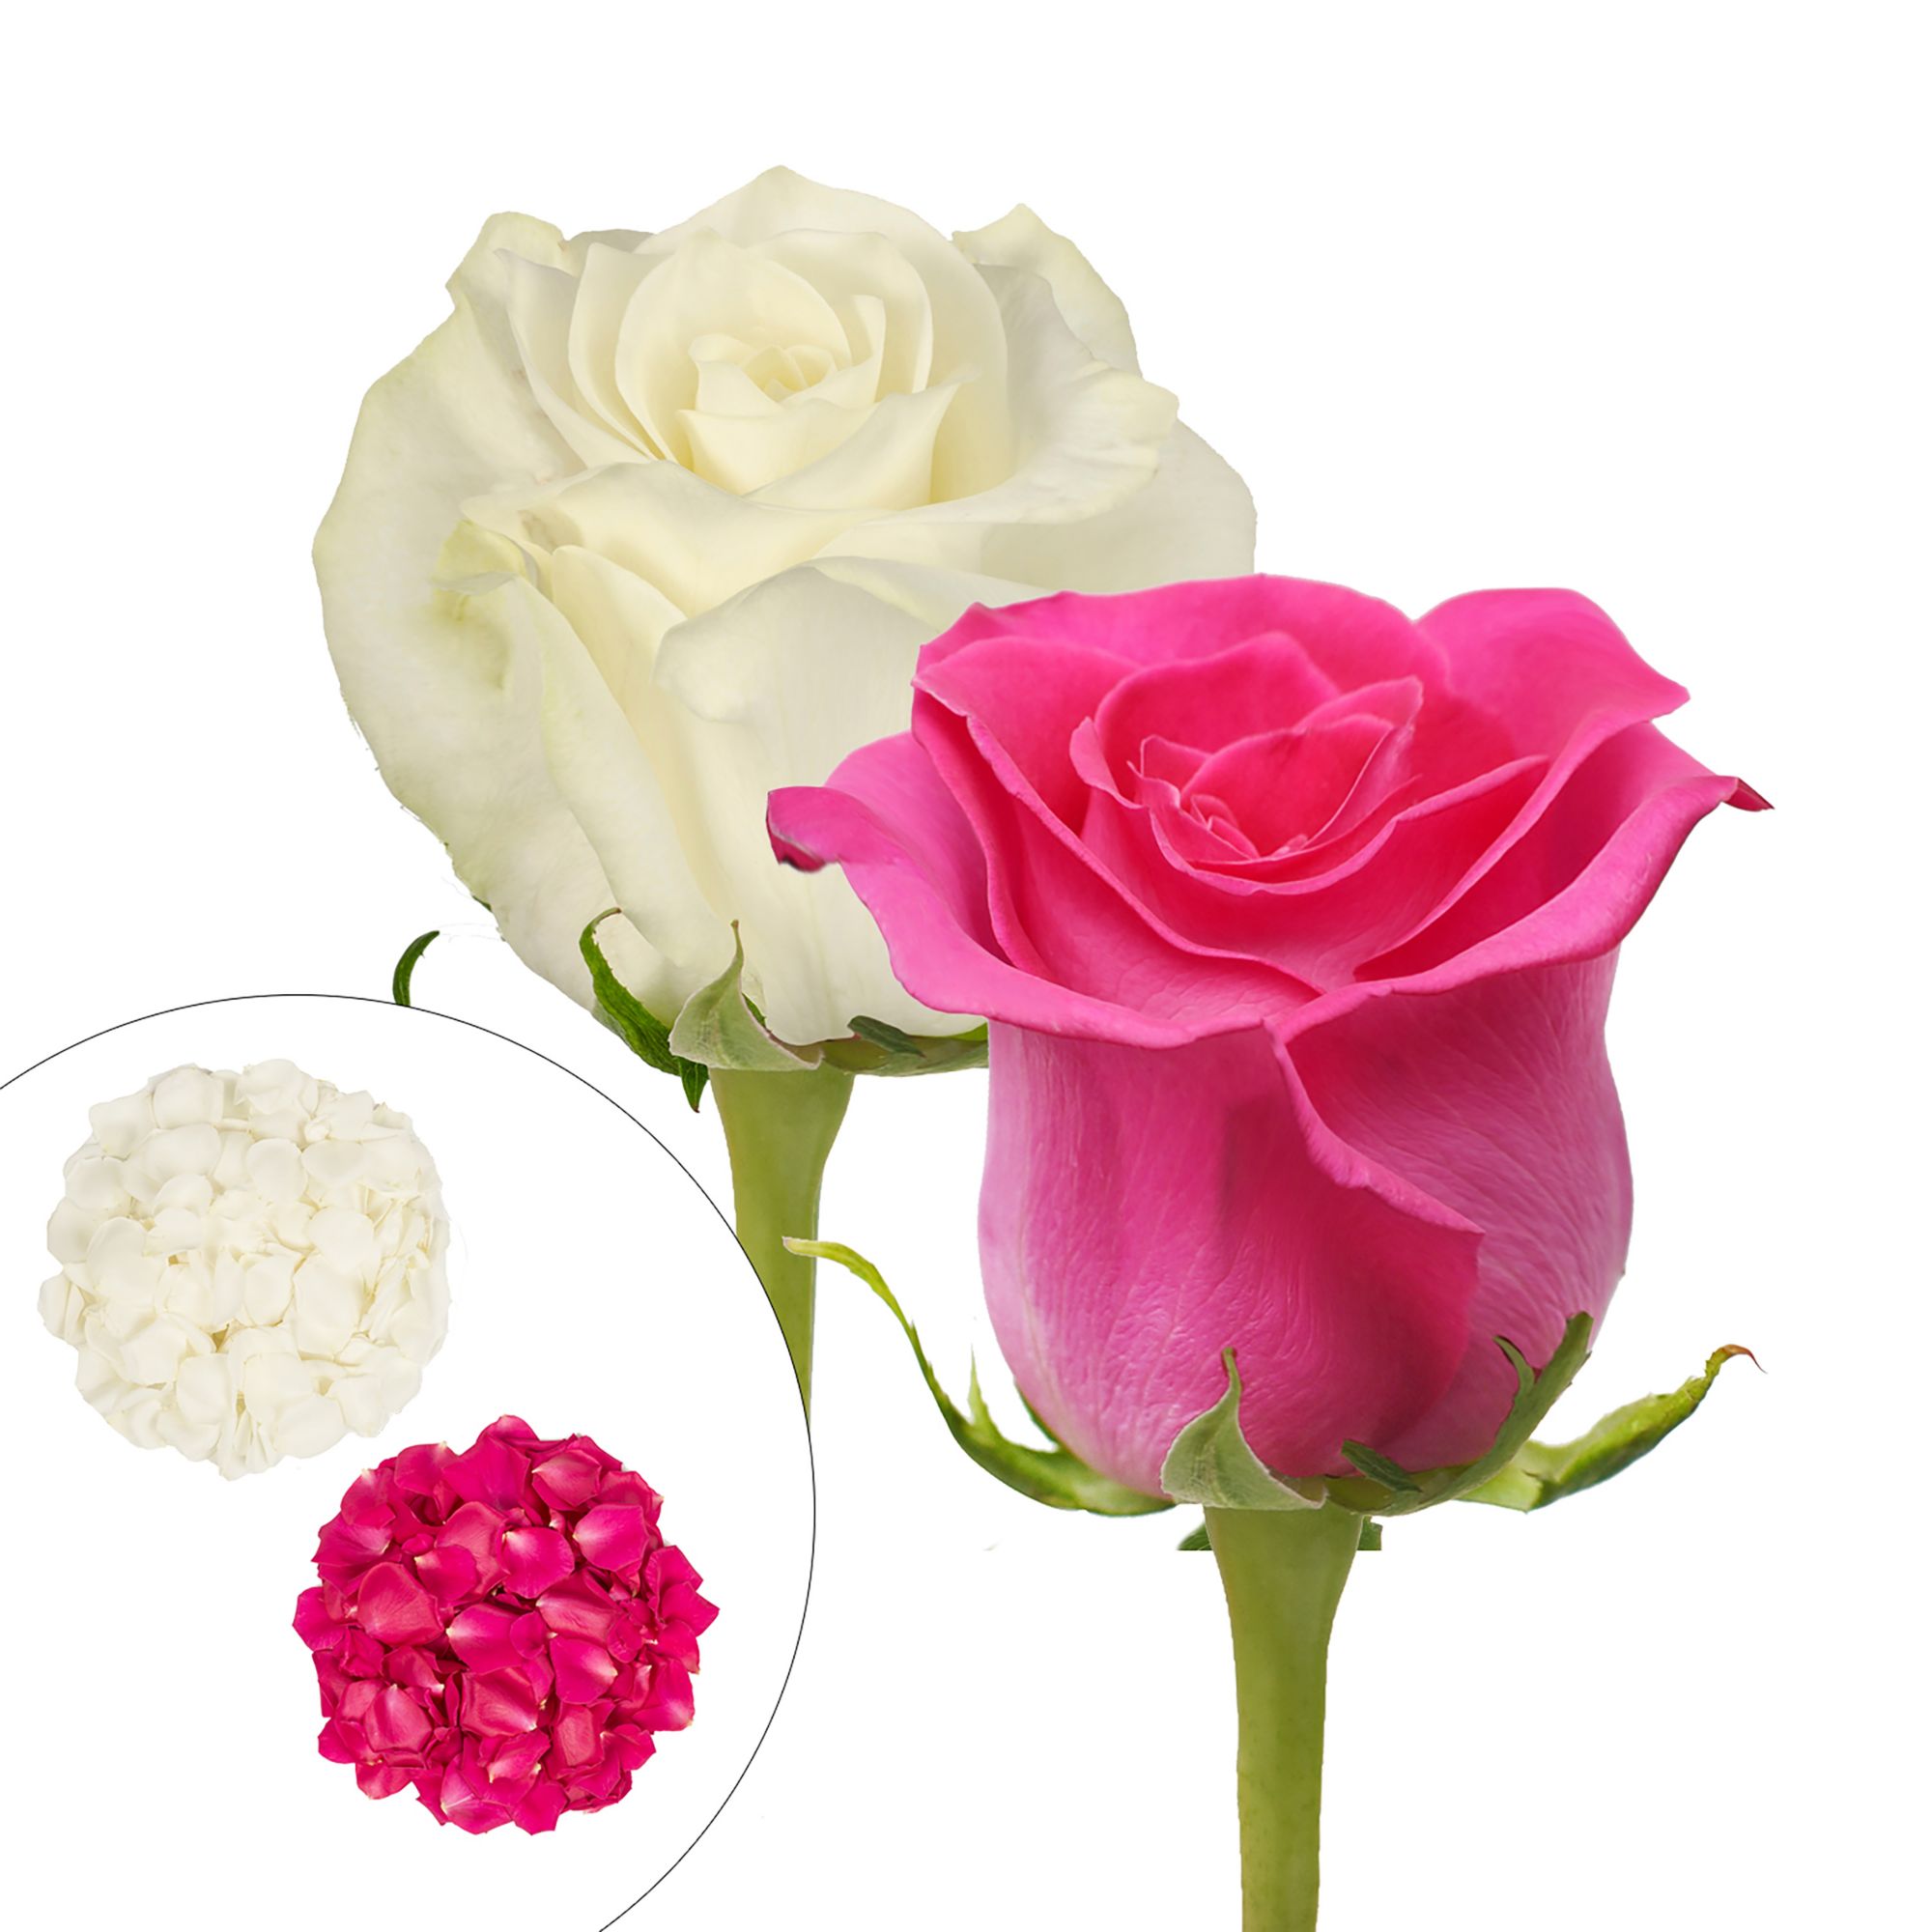 Roses and Petals Combo Box, 50/25/2,000 pk. - Hot Pink, White